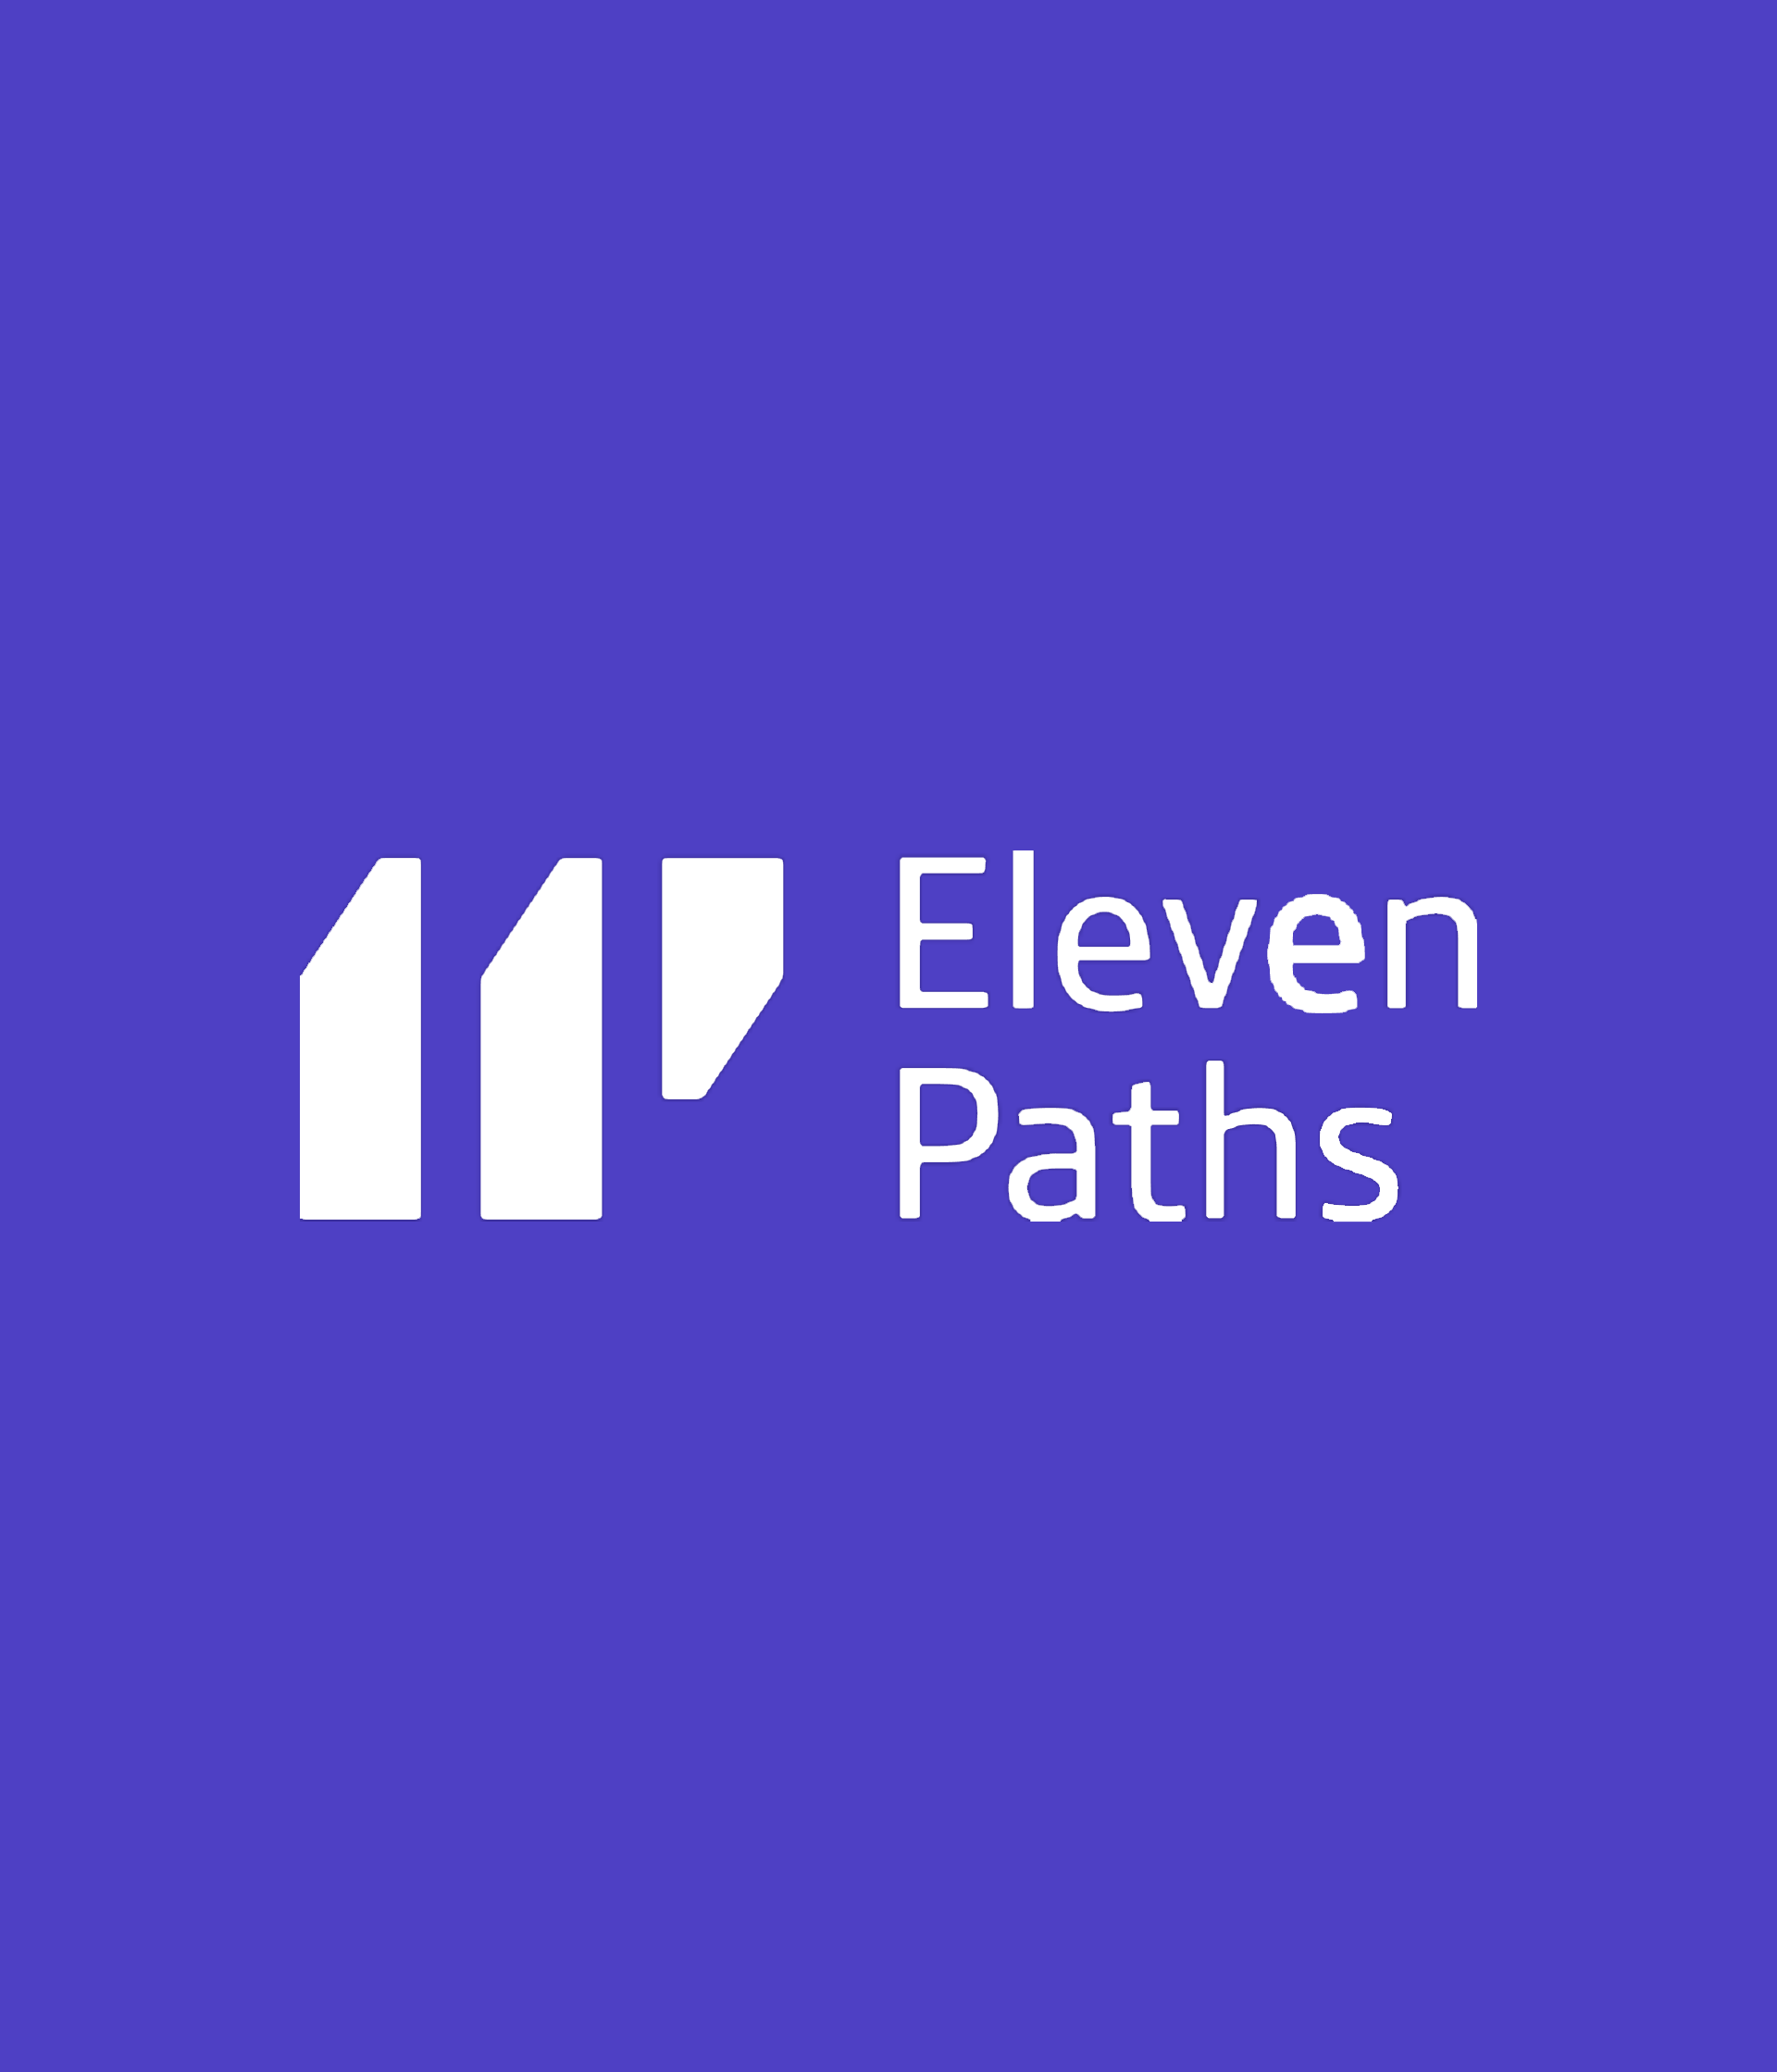 Eleven Paths